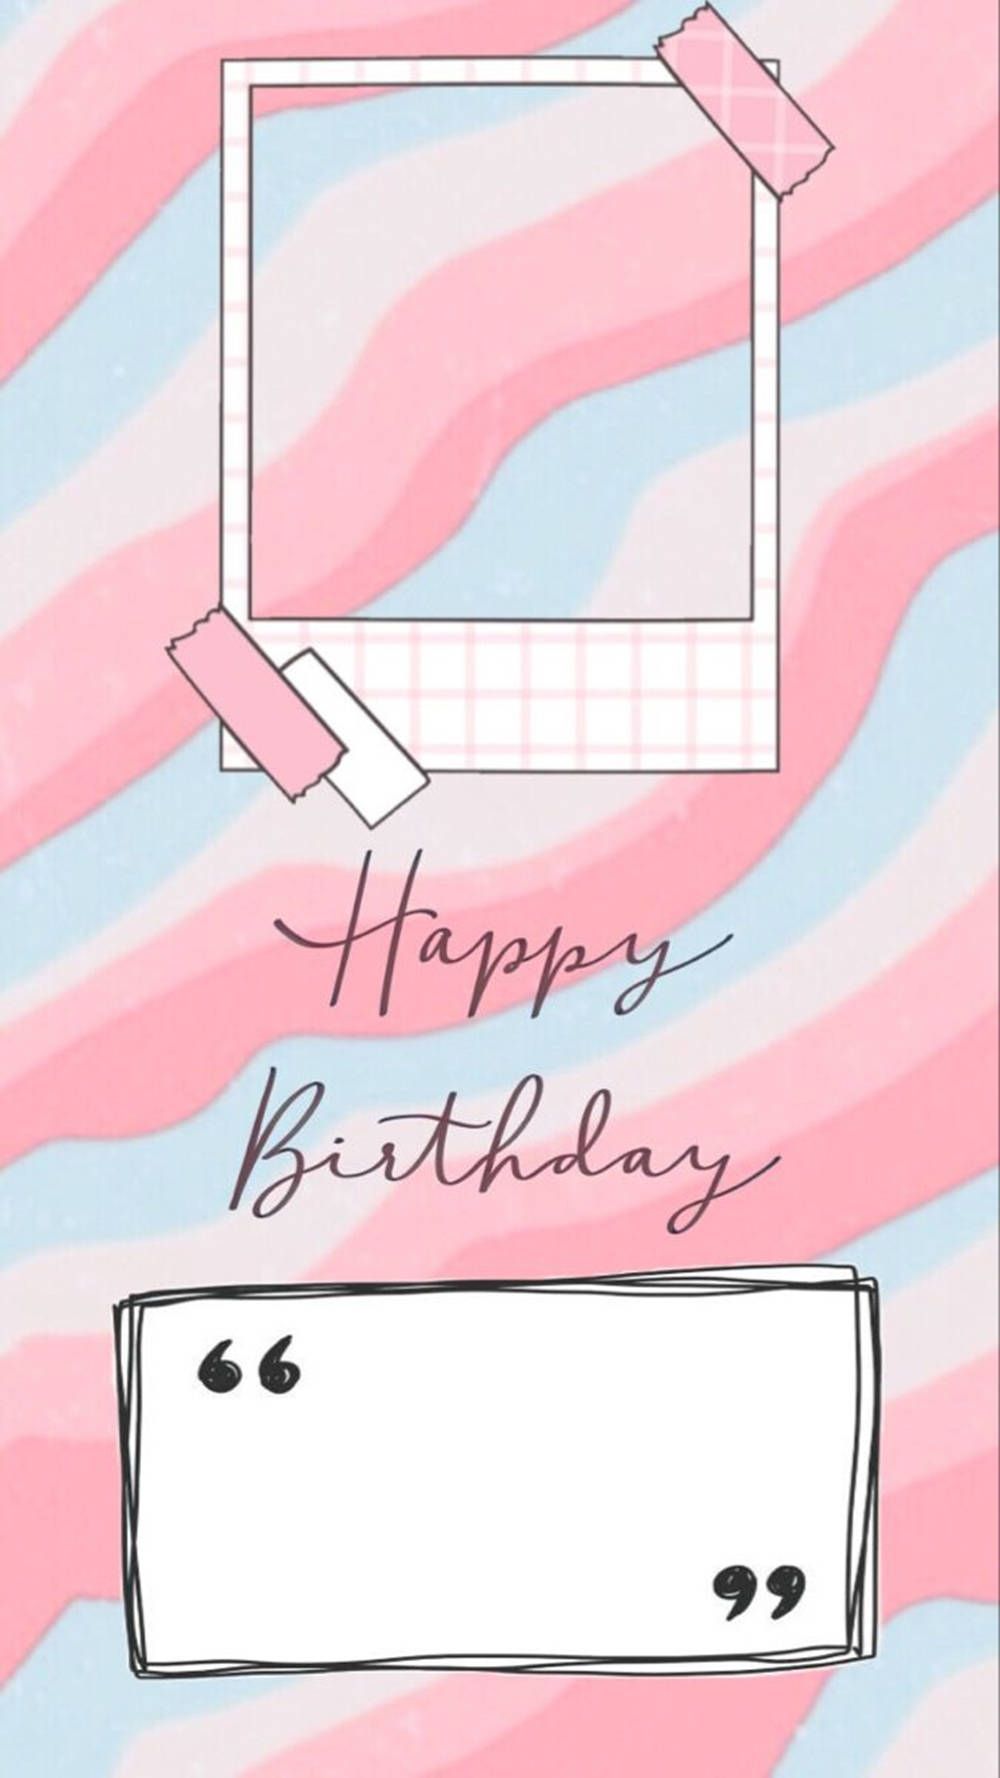 Download Pastel Aesthetic Happy Birthday Wallpaper